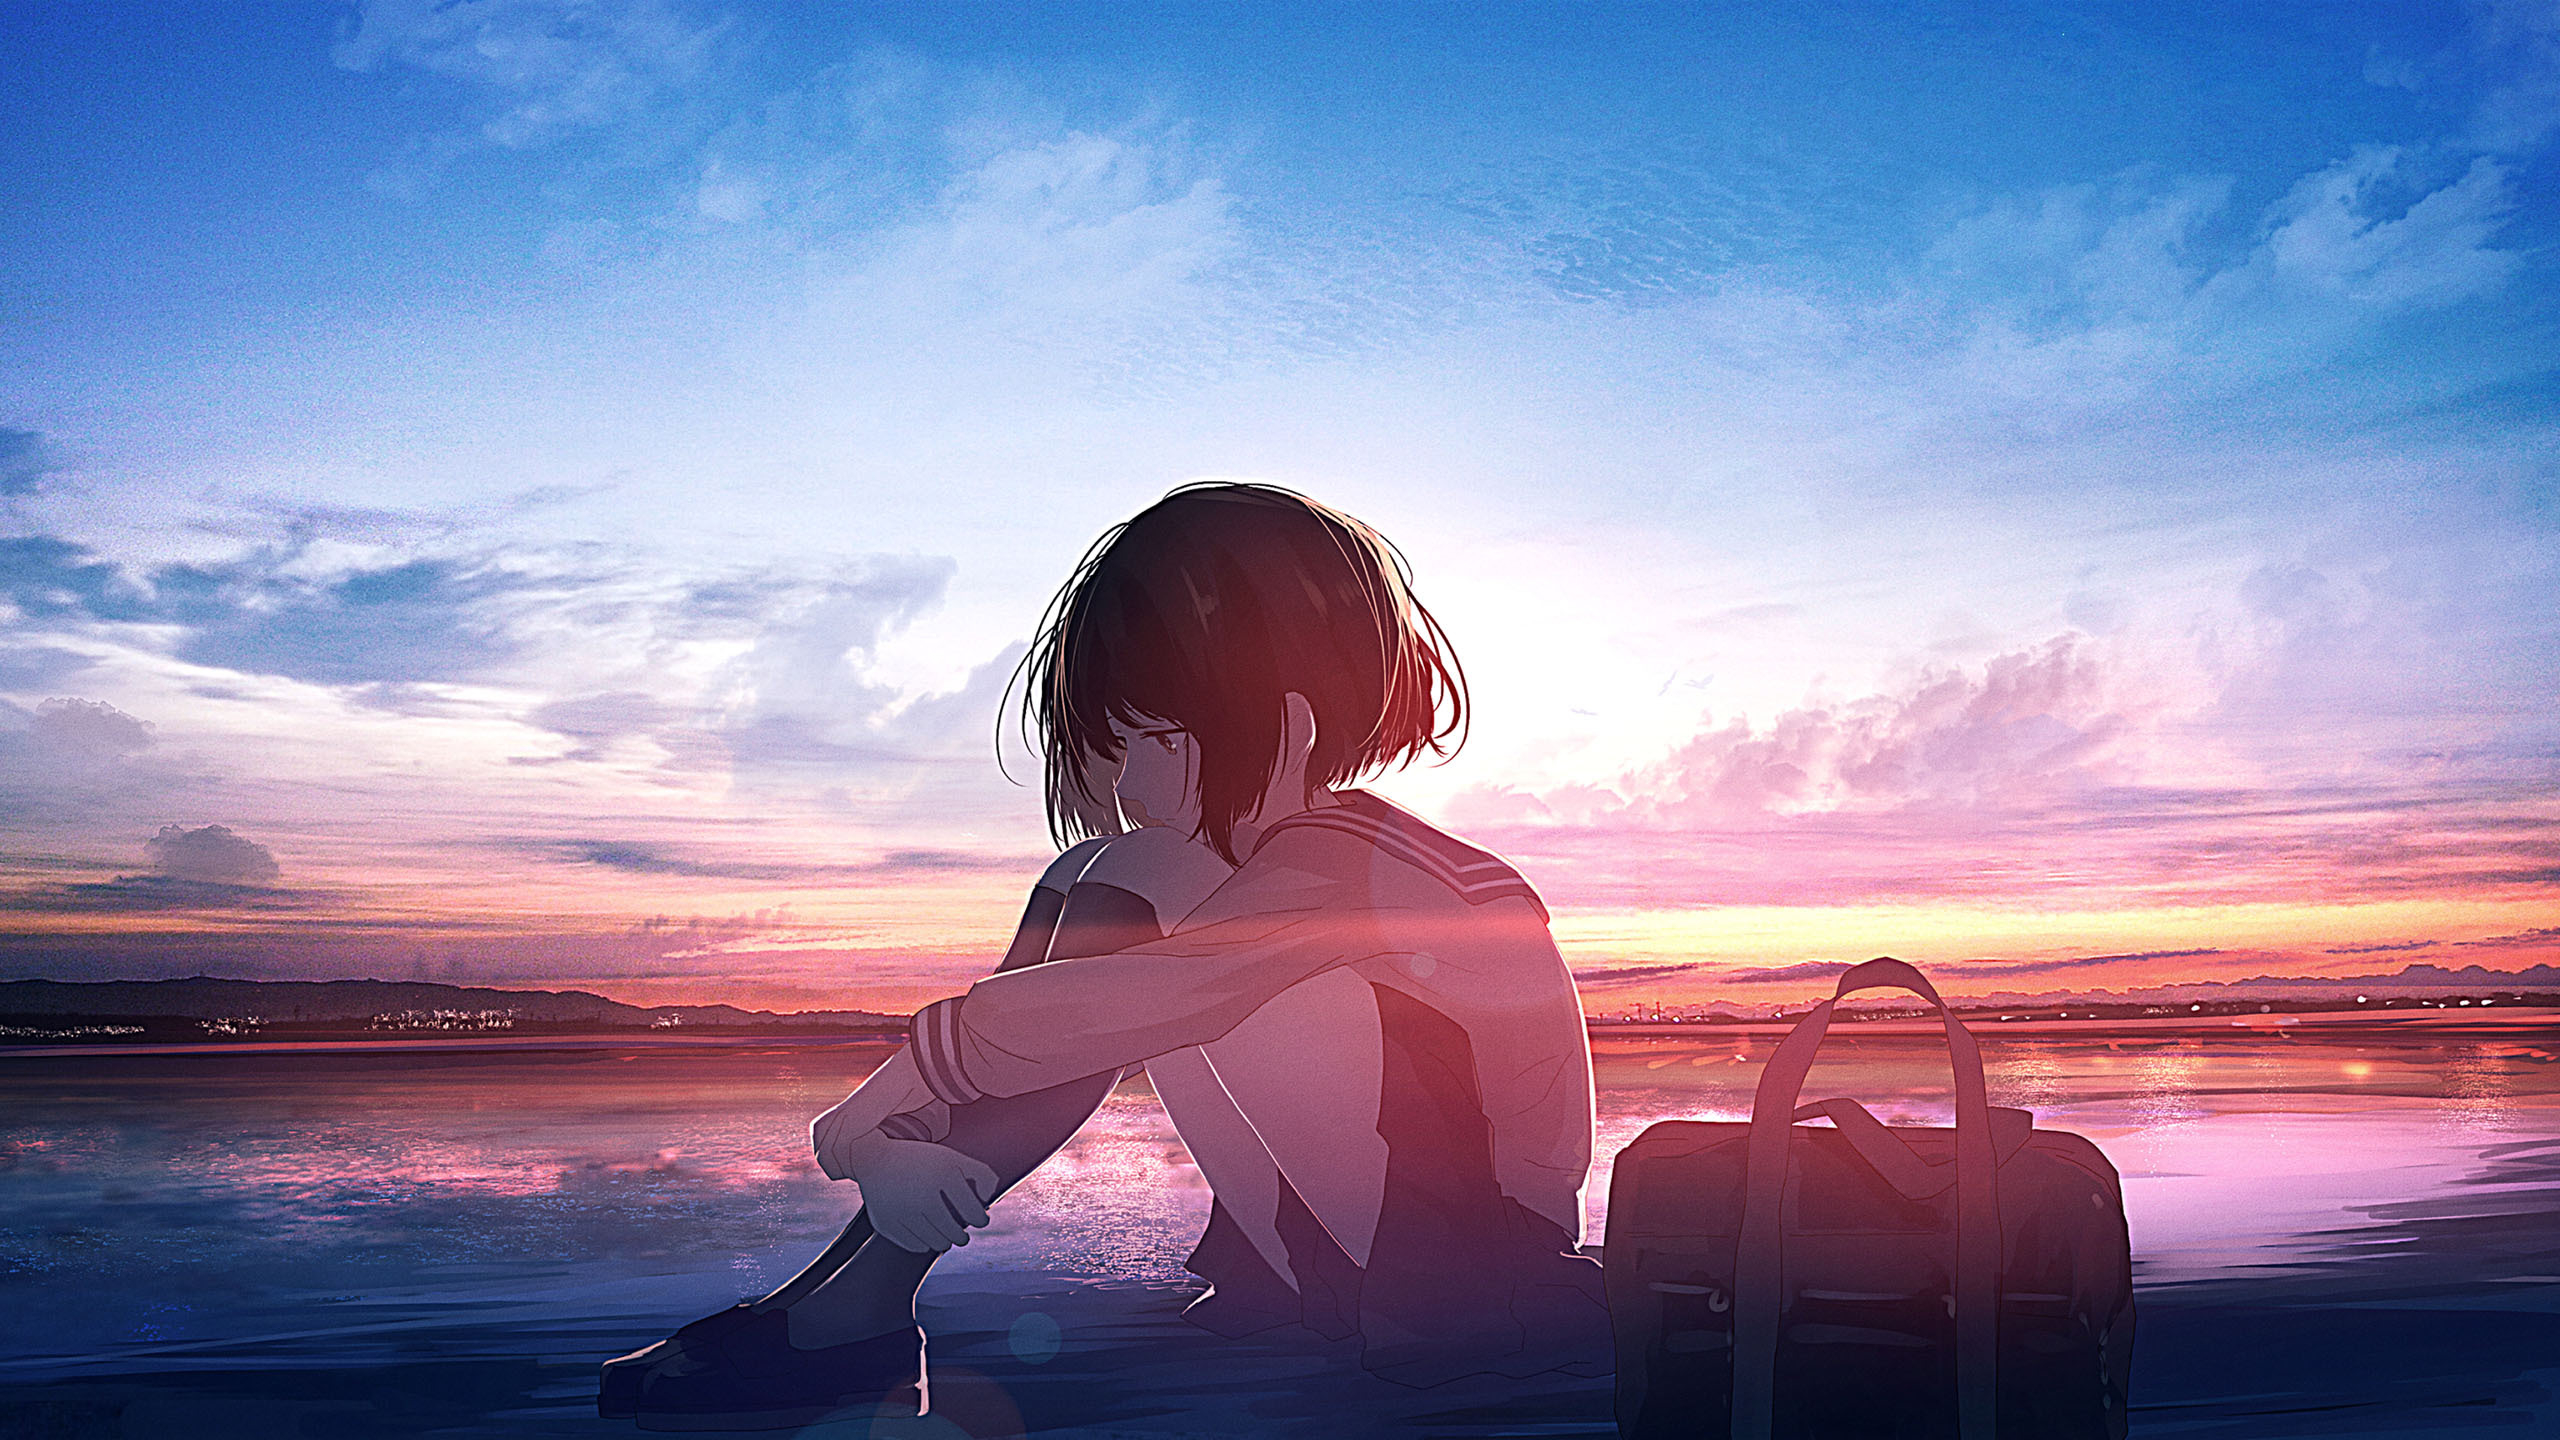 Anime 2560x1440 alone school uniform artwork Mifuru schoolgirl looking away sunset sunset glow sky clouds short hair